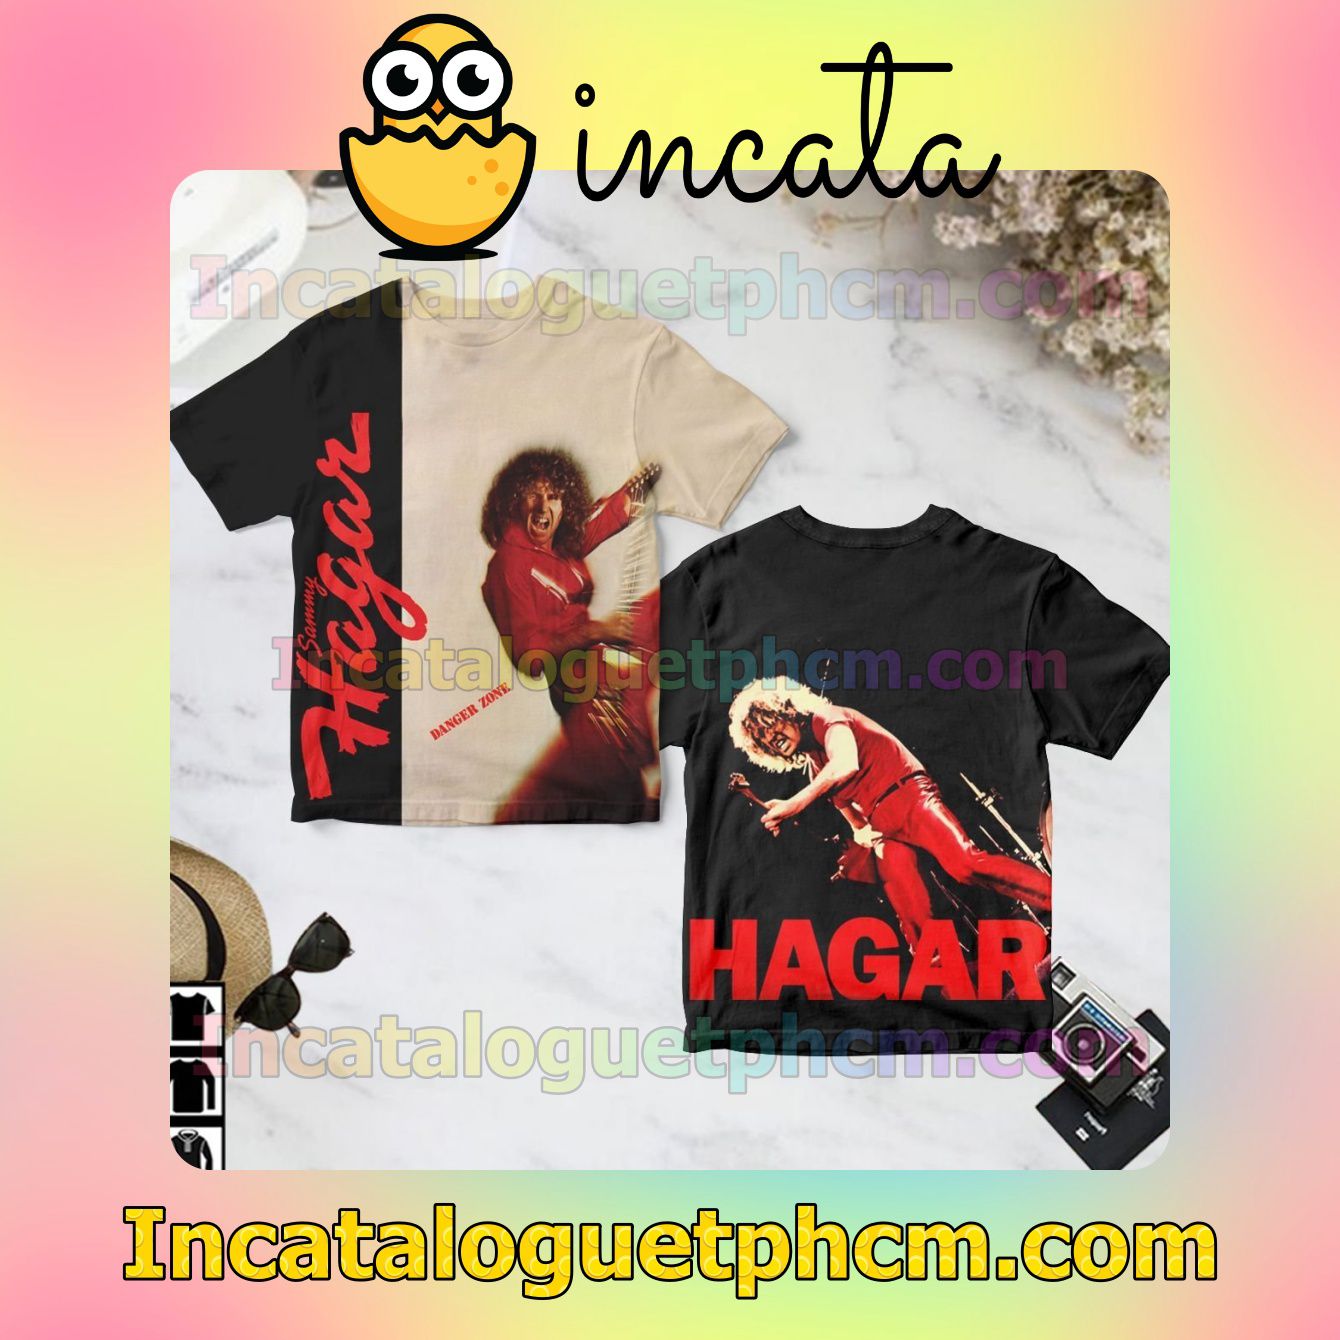 Sammy Hagar Danger Zone Album Cover Gift Shirt